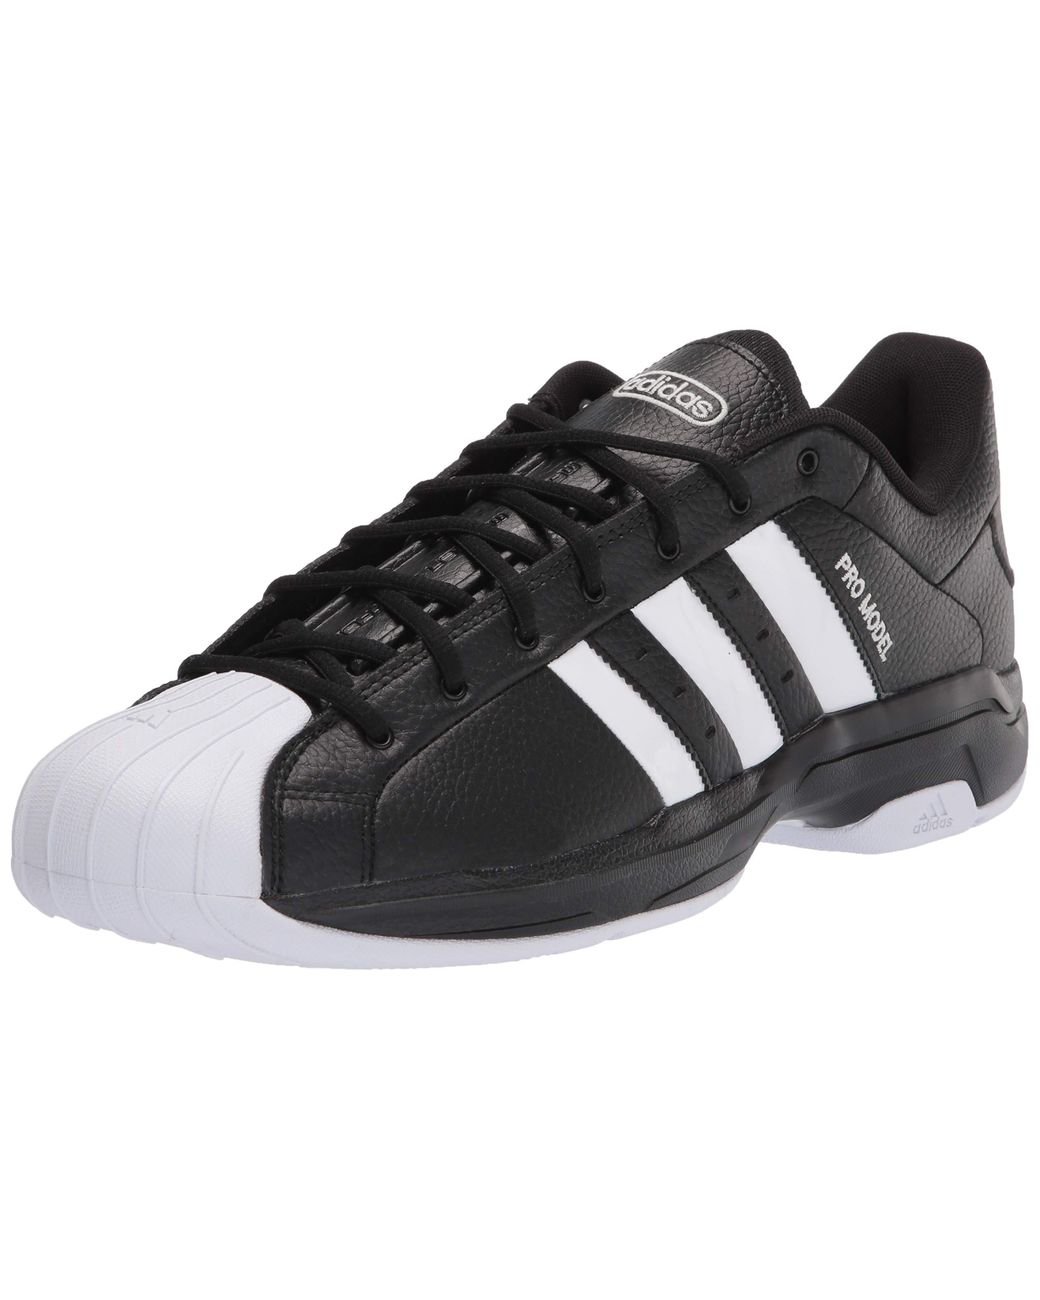 adidas Pro Model 2g Low Basketball Shoe in Black/White/Black (White ...